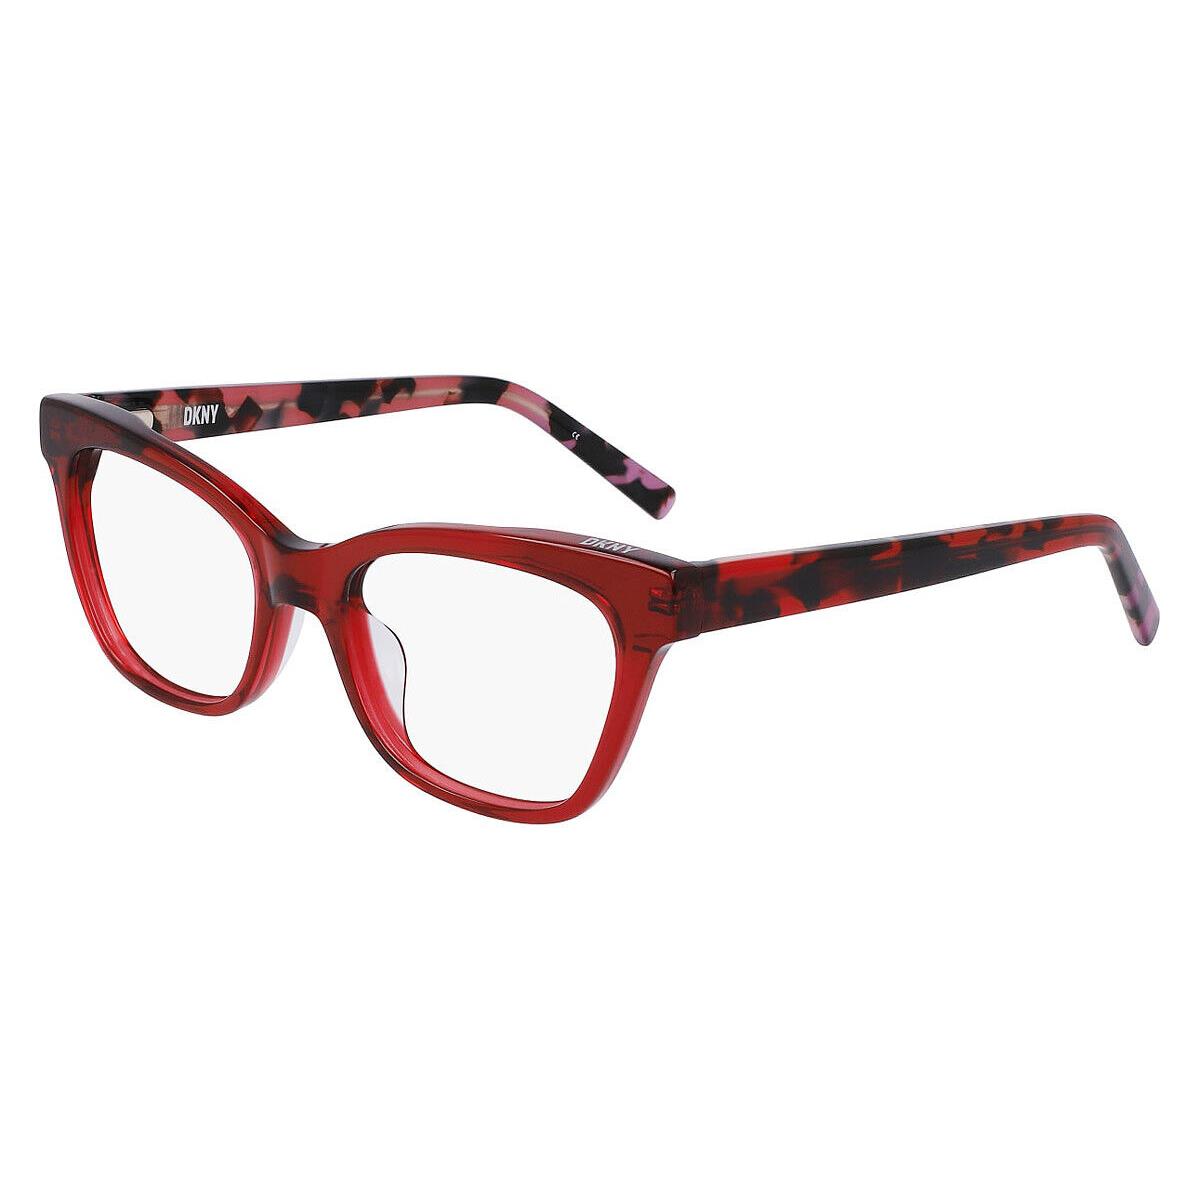 Dkny DK5053 Eyeglasses Women Crystal Red Cat Eye 51mm - Frame: Crystal Red, Lens: